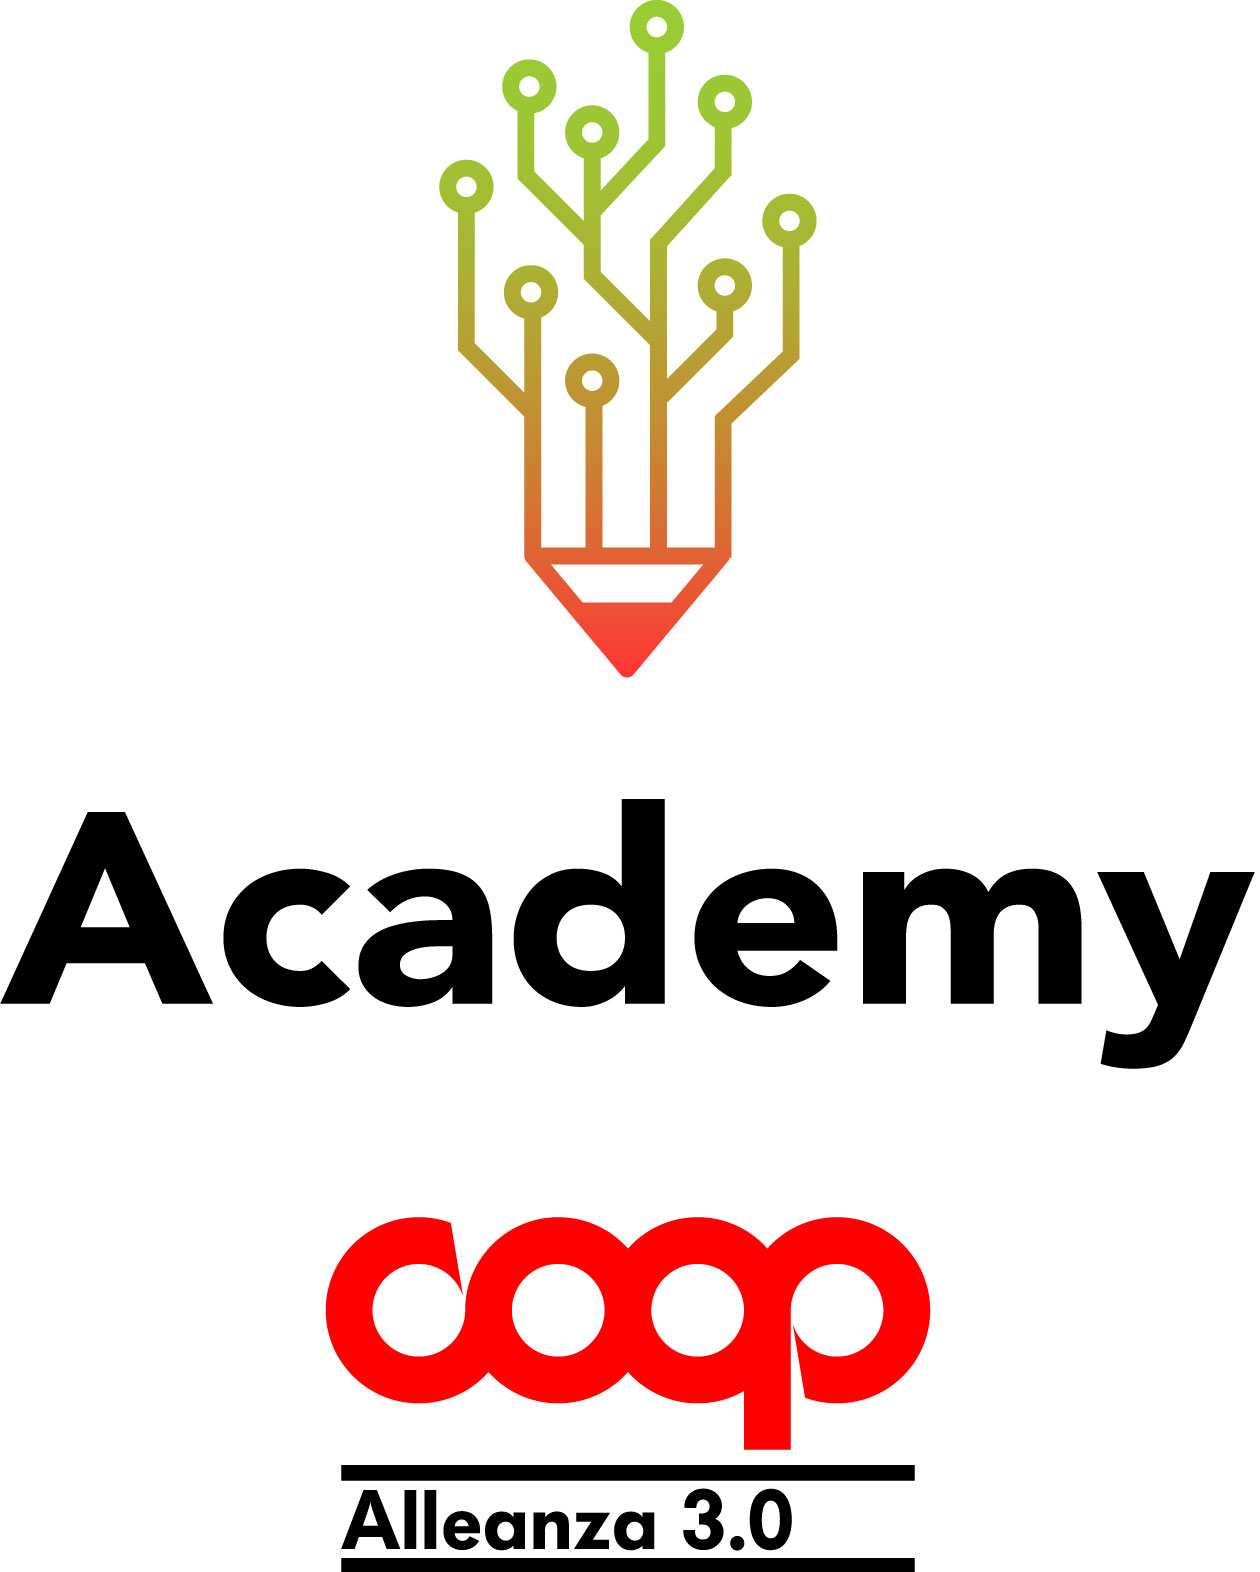 coop-academy-logo-verticale-web